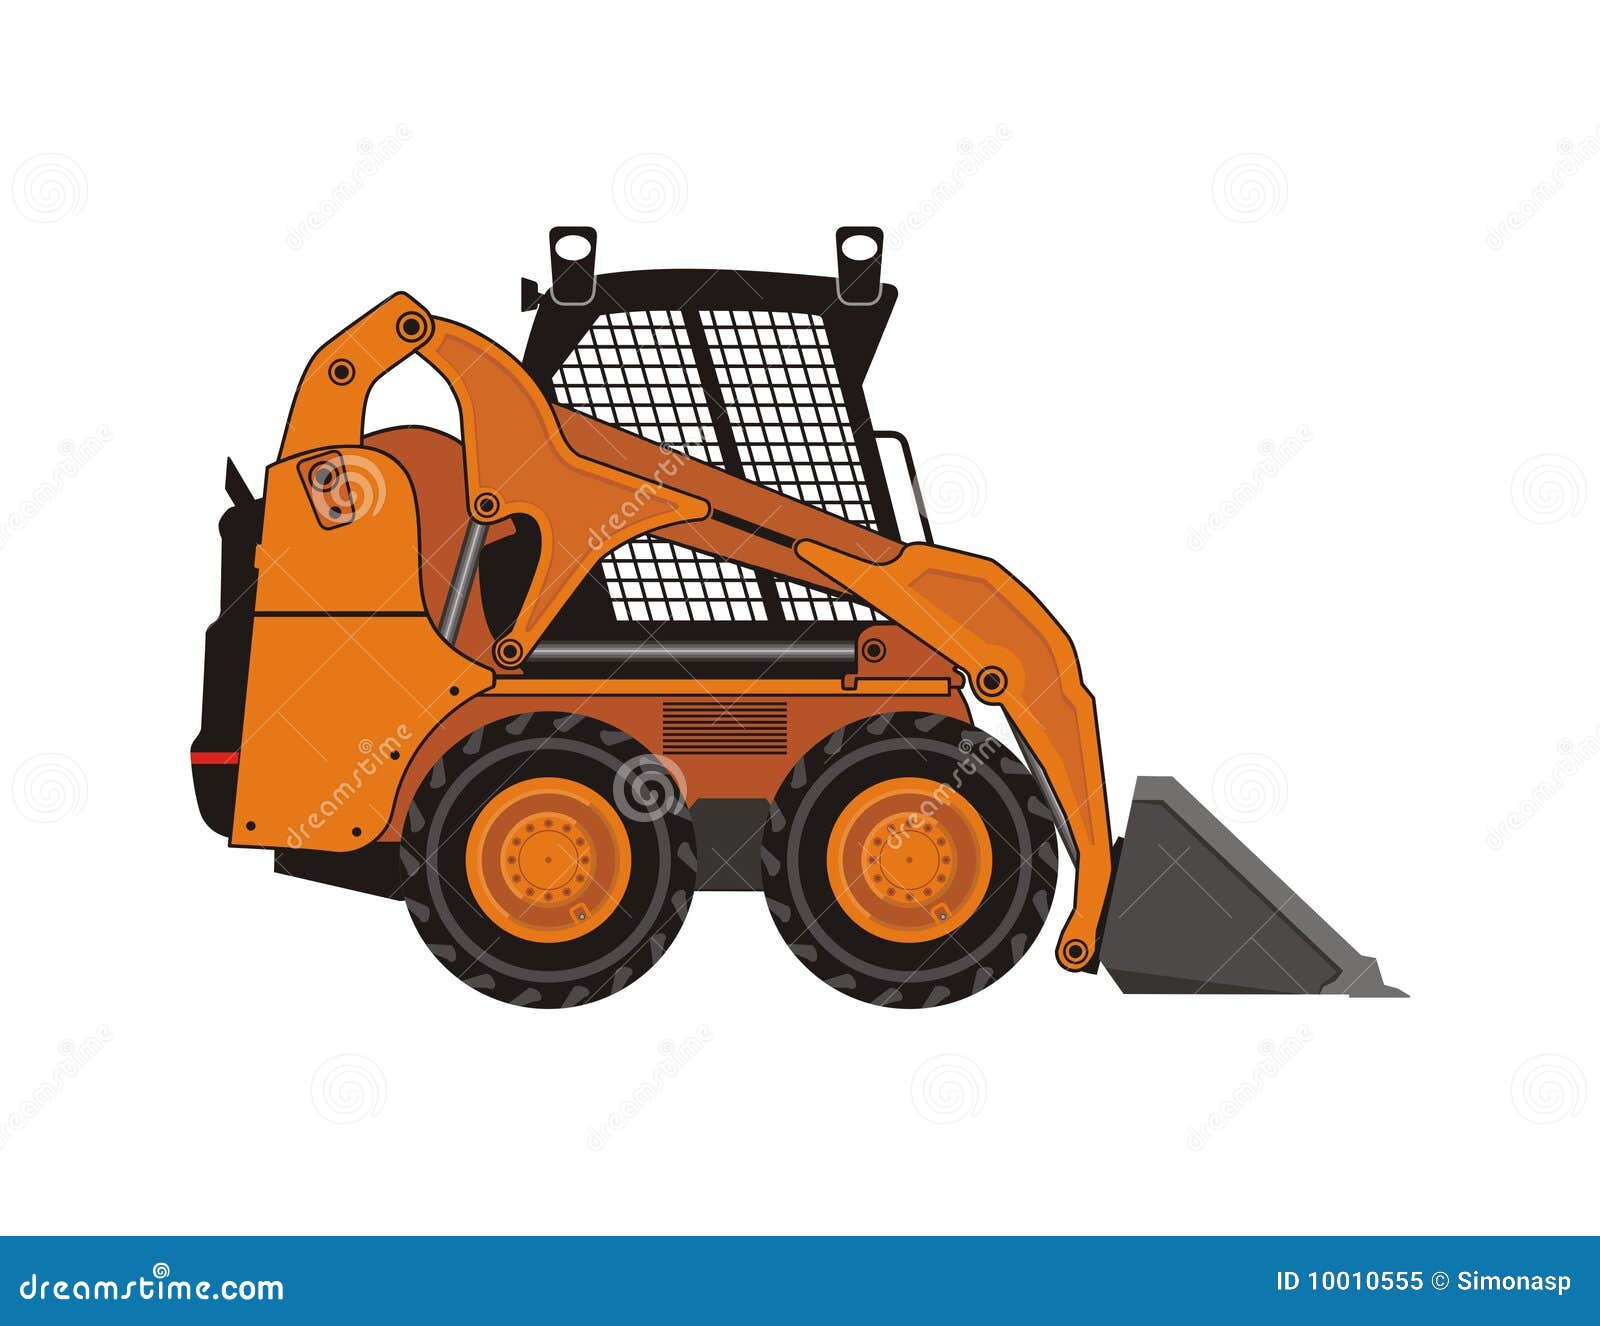 compact excavator